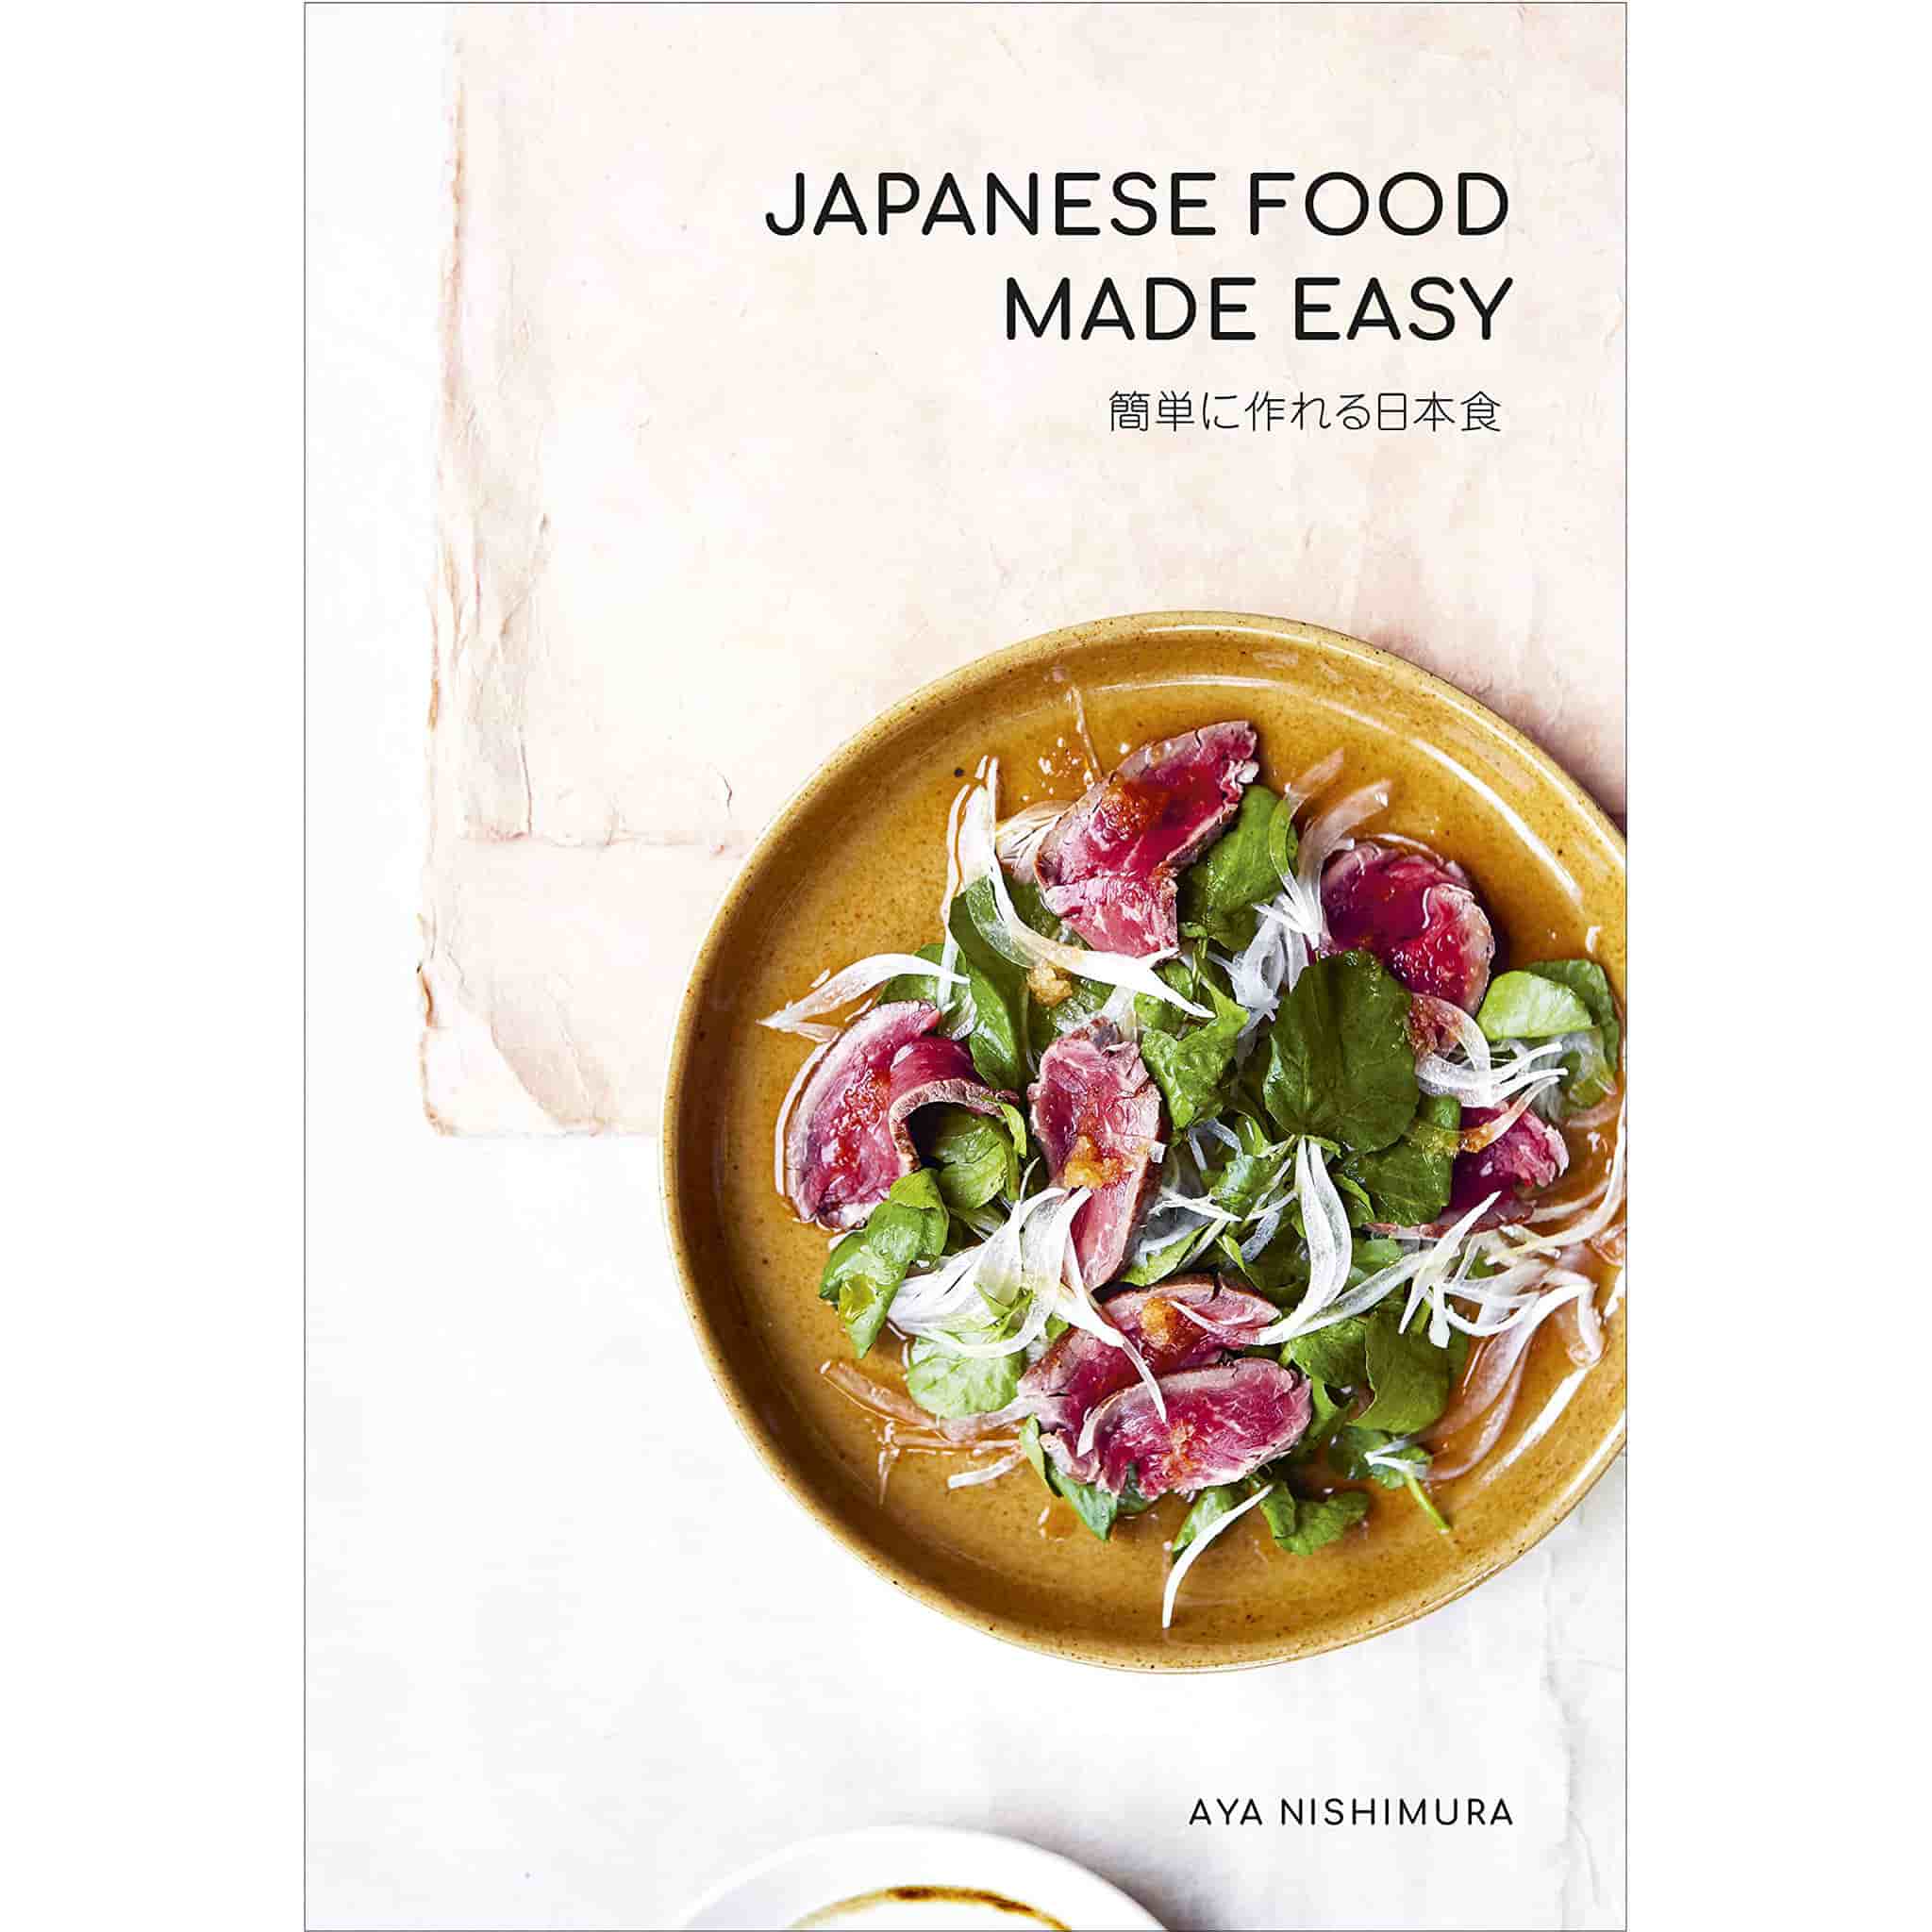 Japanese Food Made Easy by Aya Nishimura